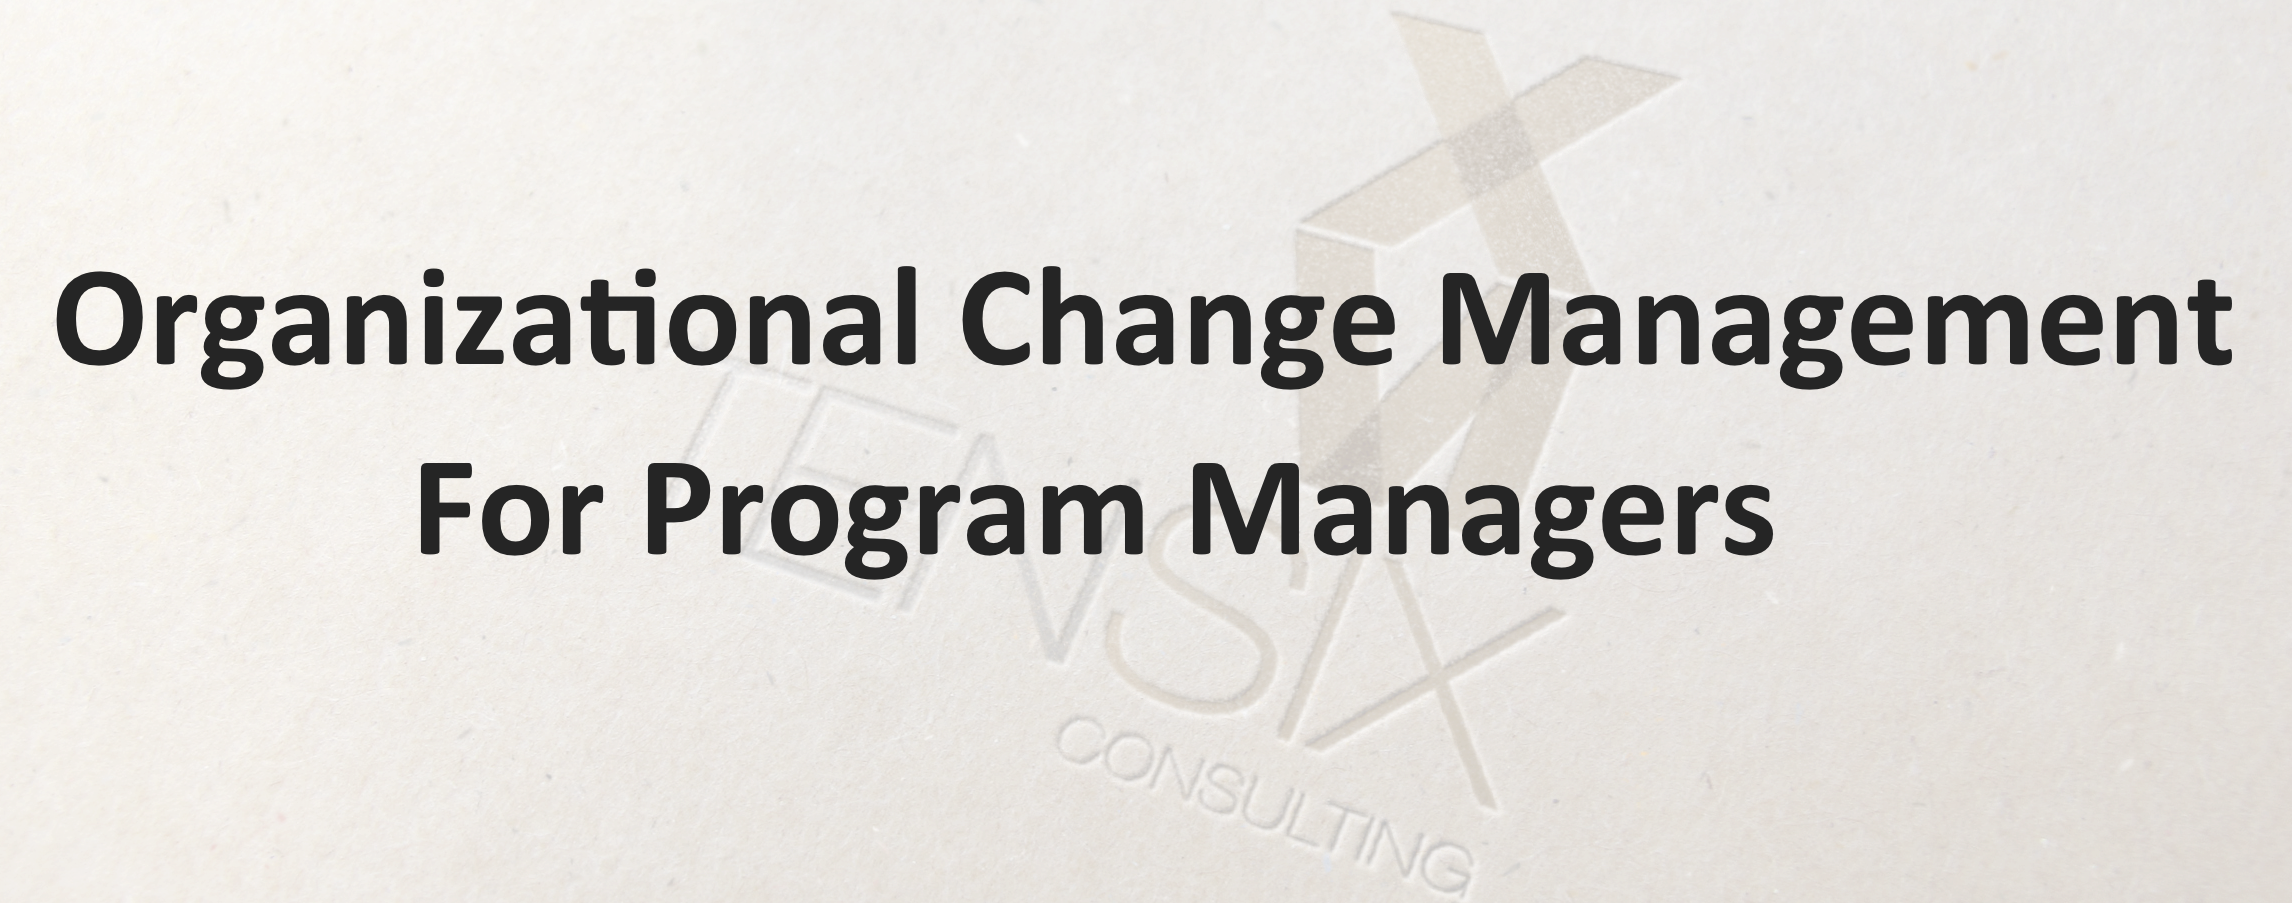 Organizational Change Management For Program Managers